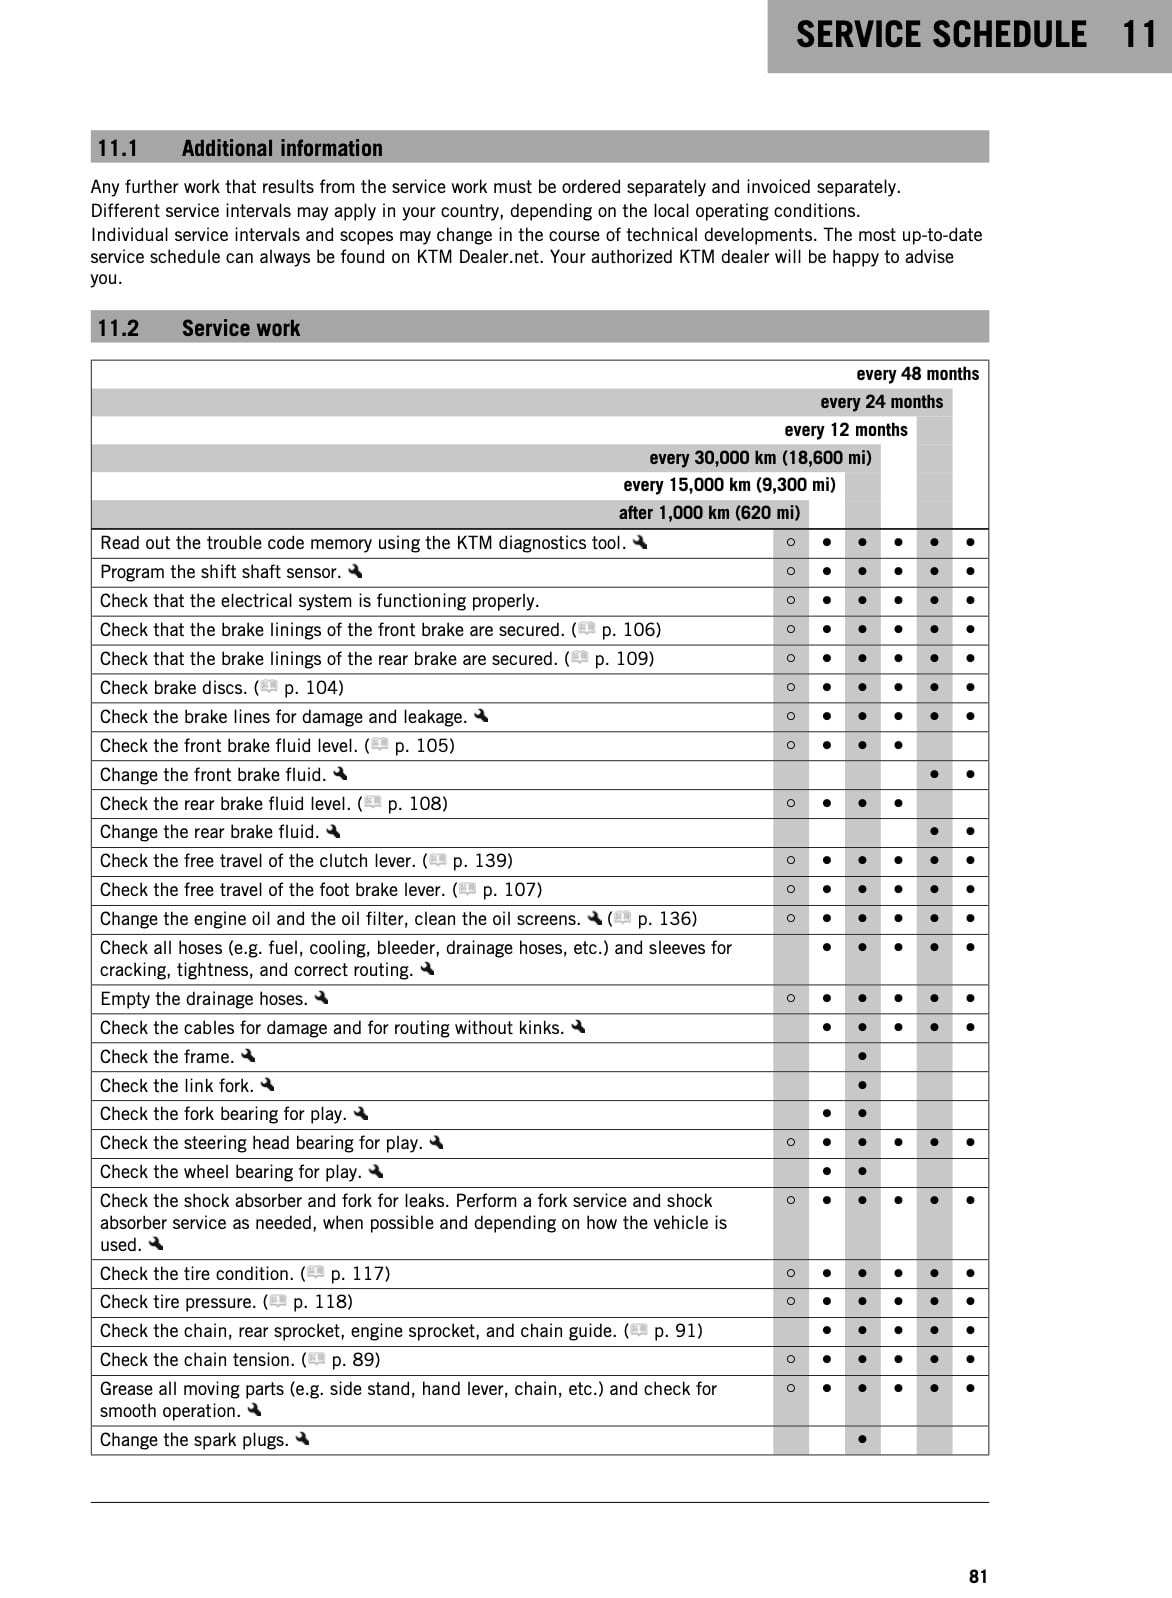 KTM 890 SMT manual screenshot service schedule (integrated 1)